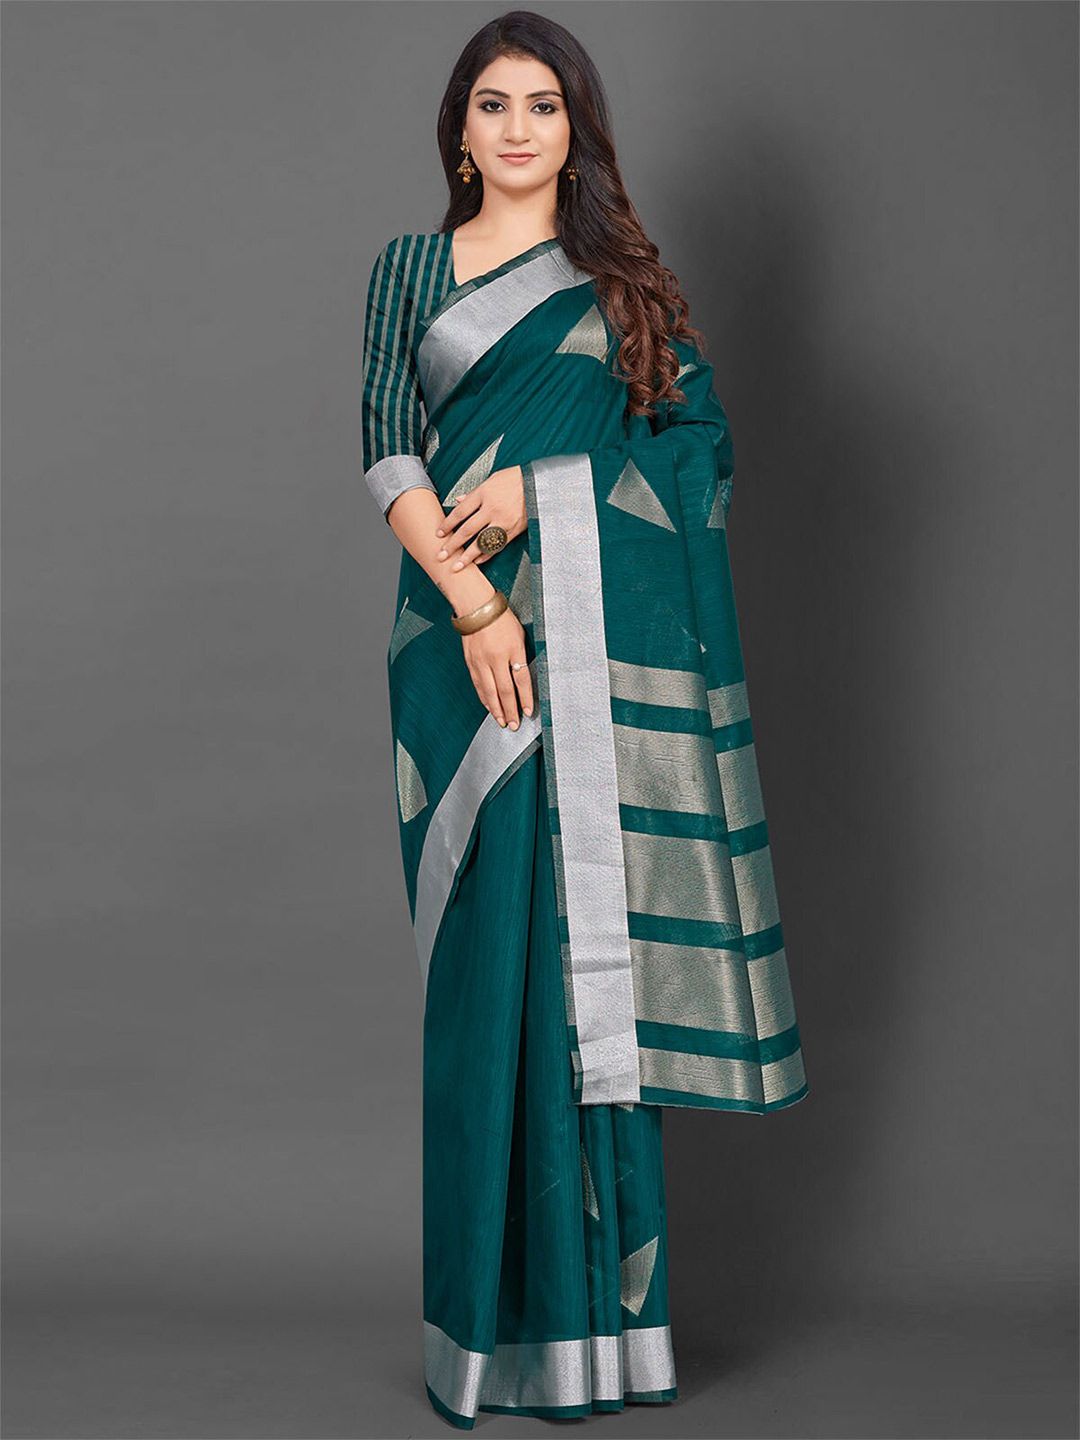 ODETTE Teal & Silver-Toned Woven Design Zari Linen Blend Saree Price in India